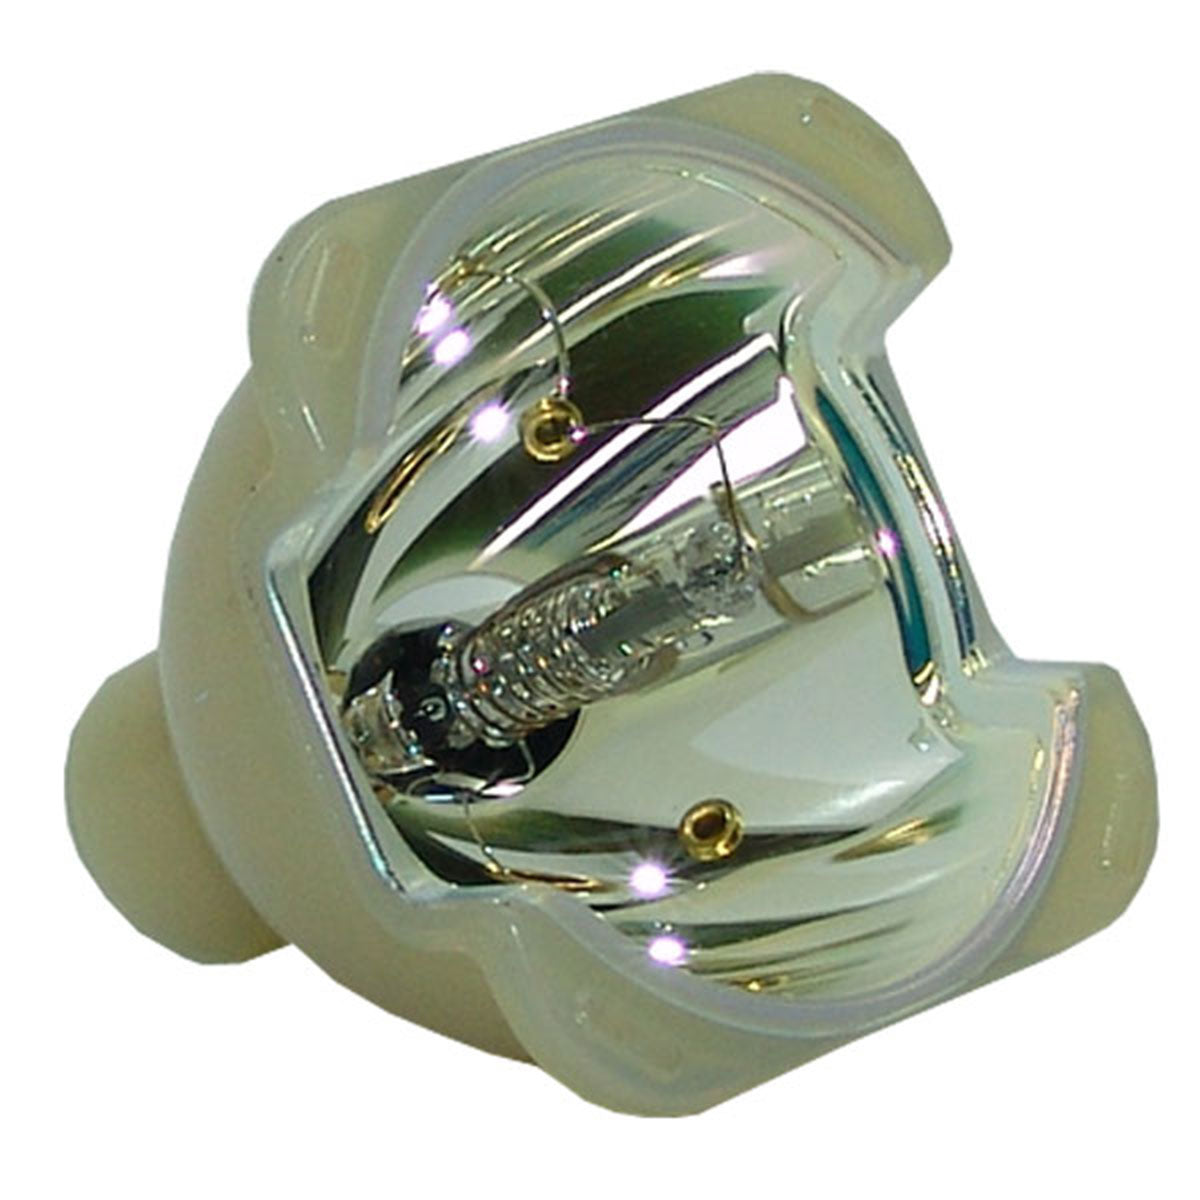 Roverlight Aurora DX3500 Philips Projector Bare Lamp